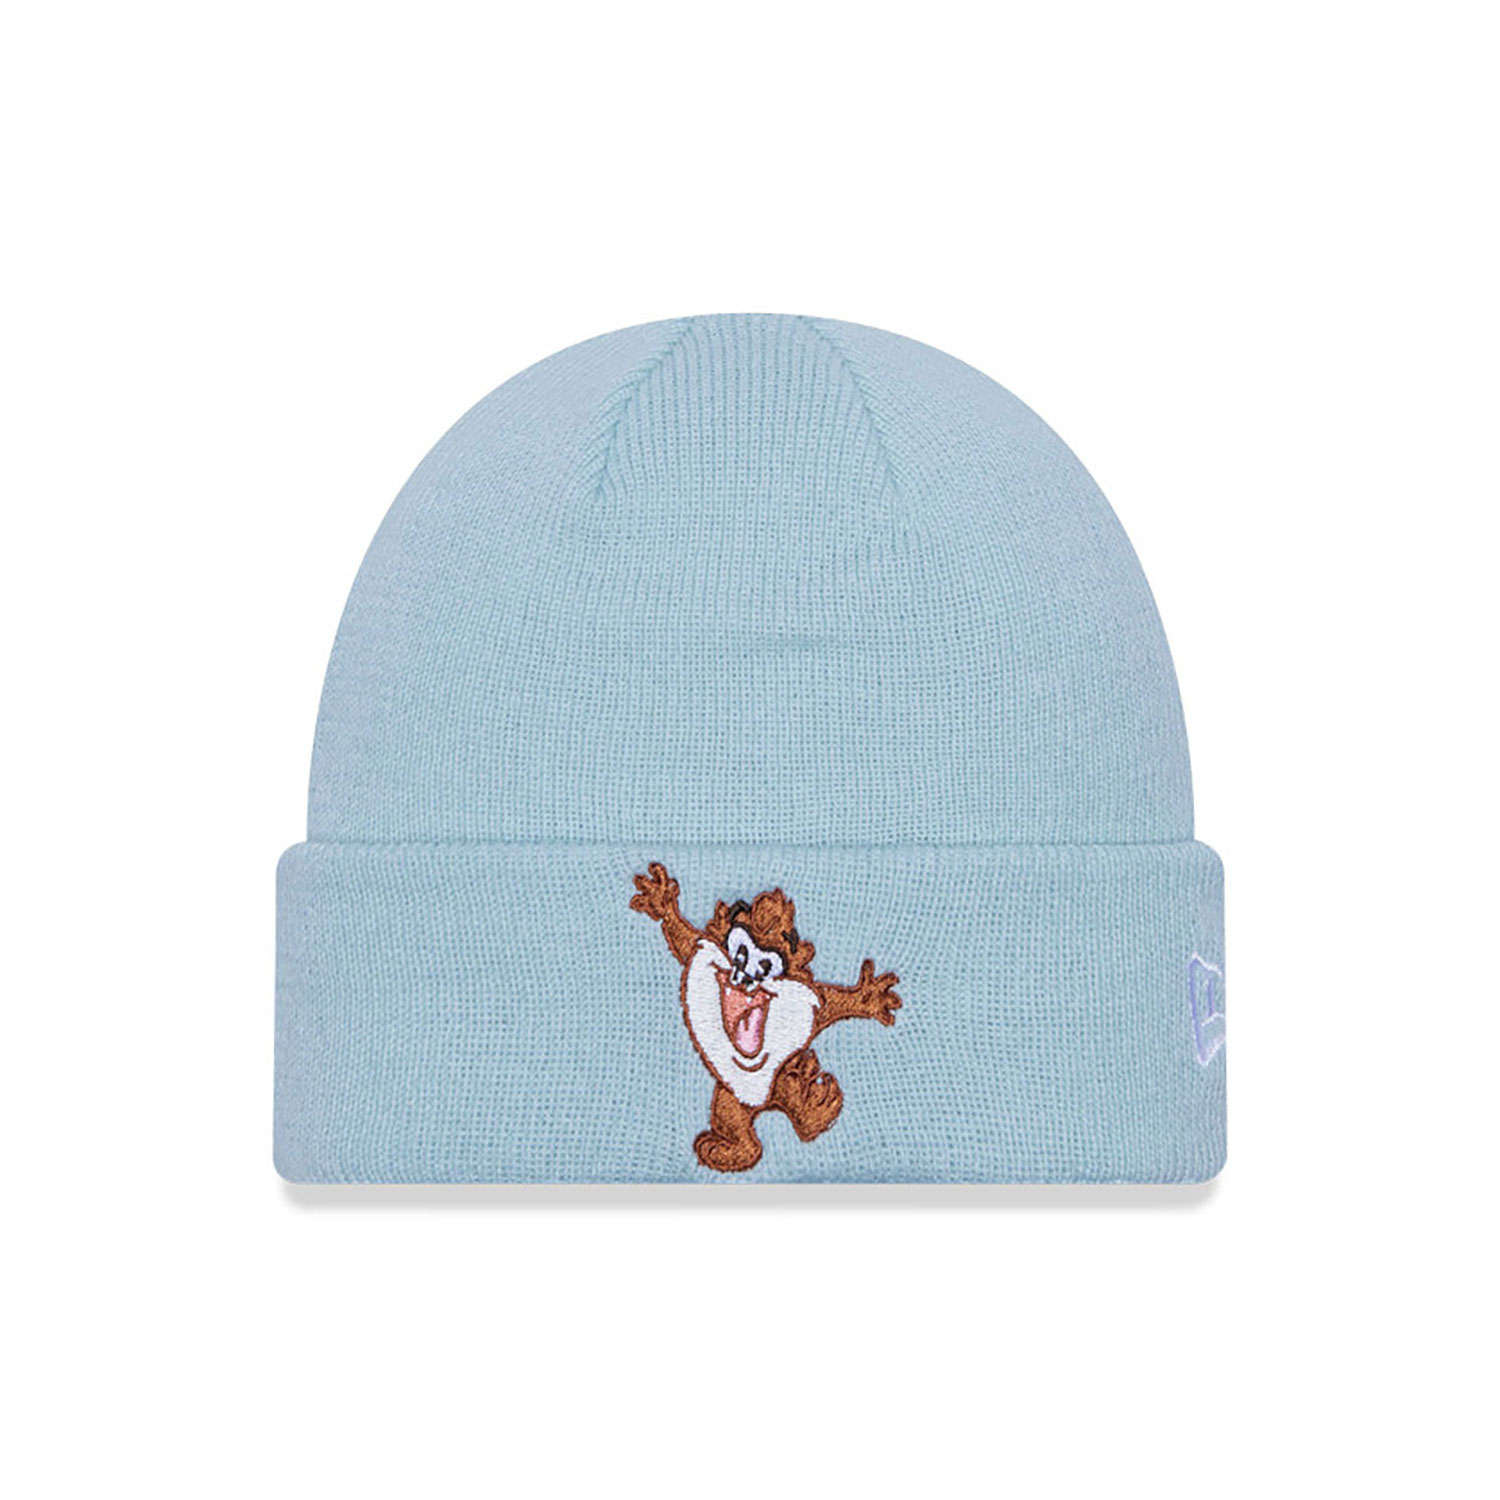 Taz Looney Tunes Toddler Blue Cuff Knit Beanie Hat